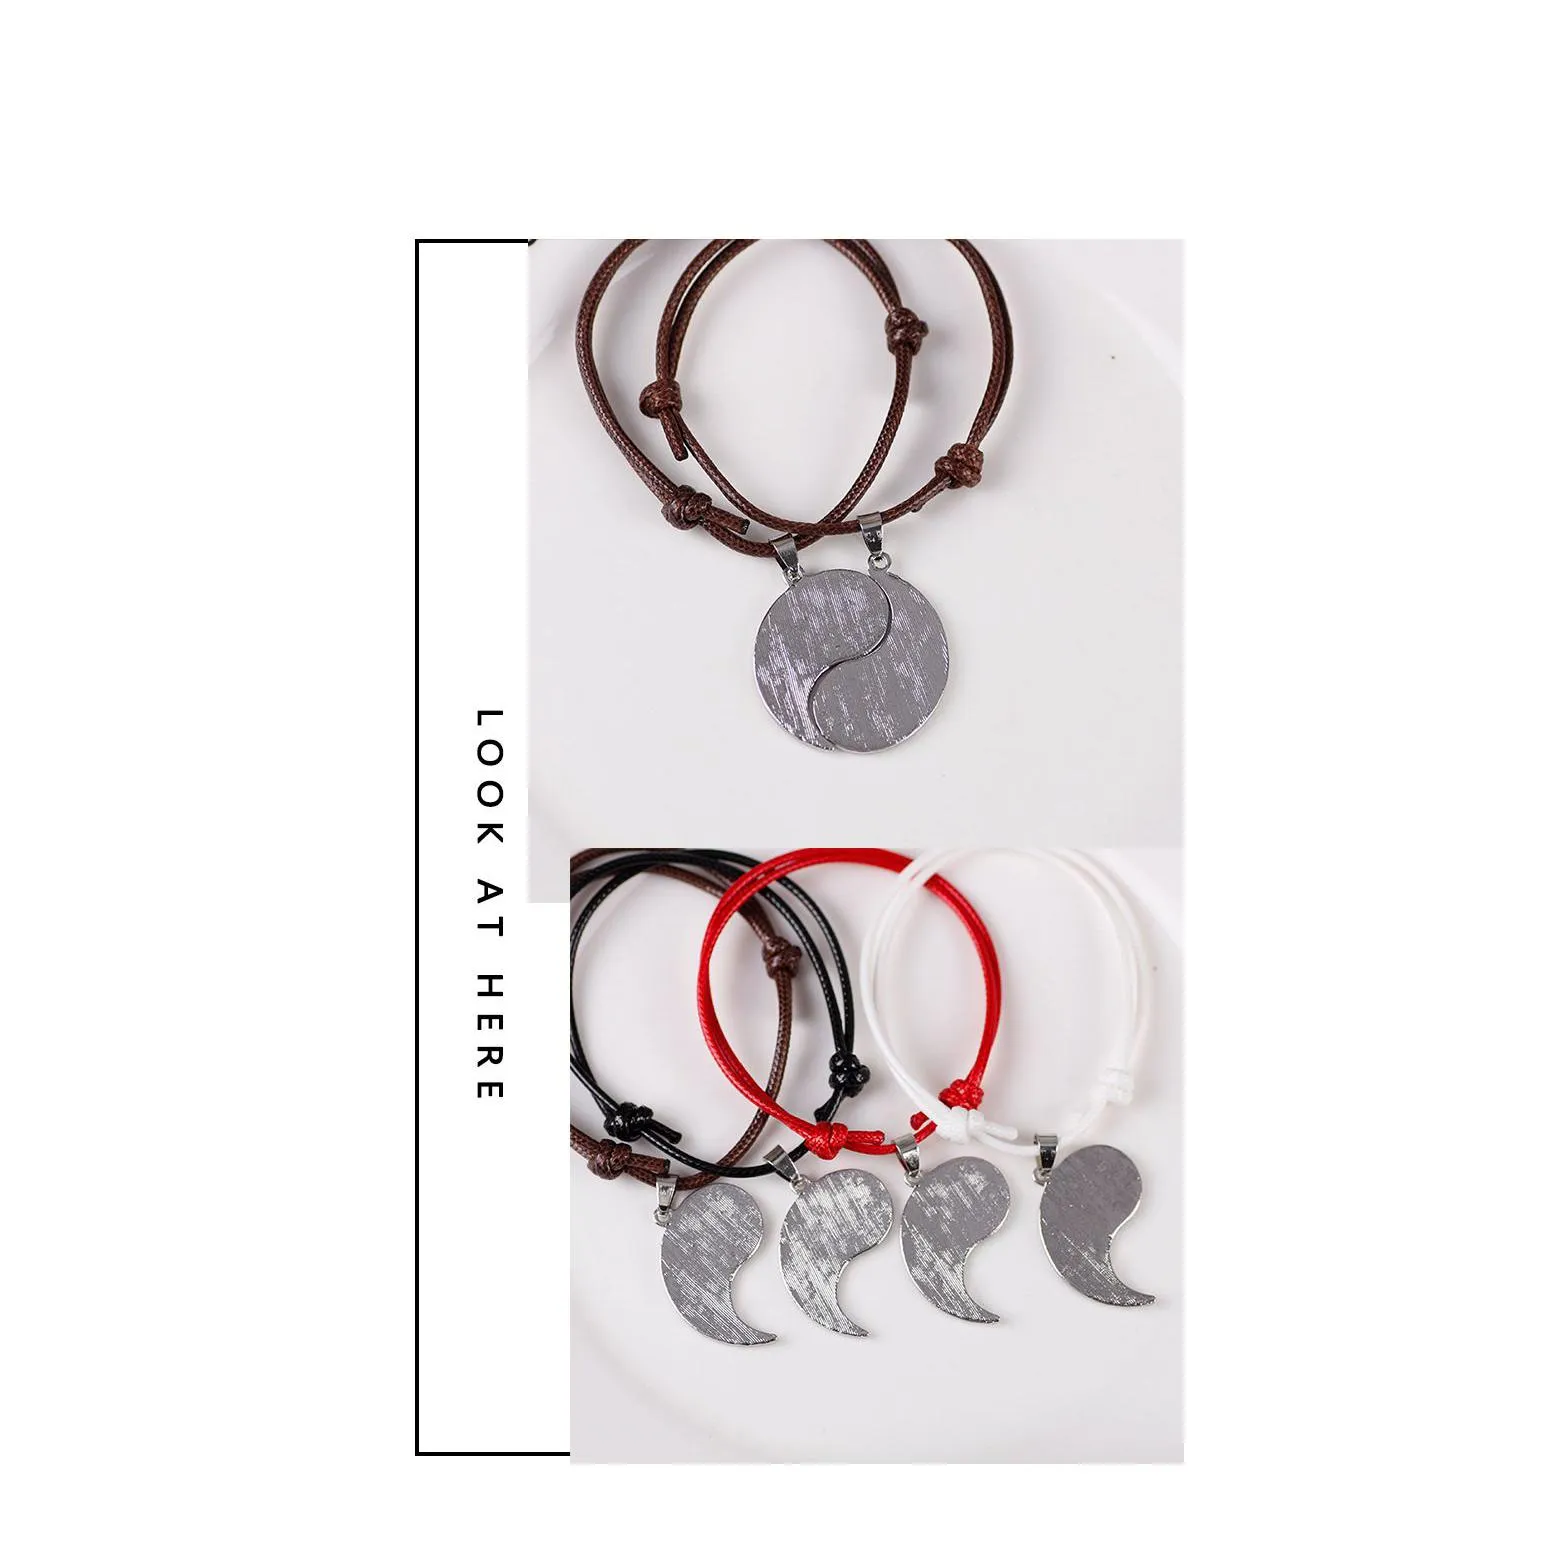 2pcs couple bracelets magnetic tai chi yin yang vintage charm bracelet black white red rope adjustable hand pendant jewelry